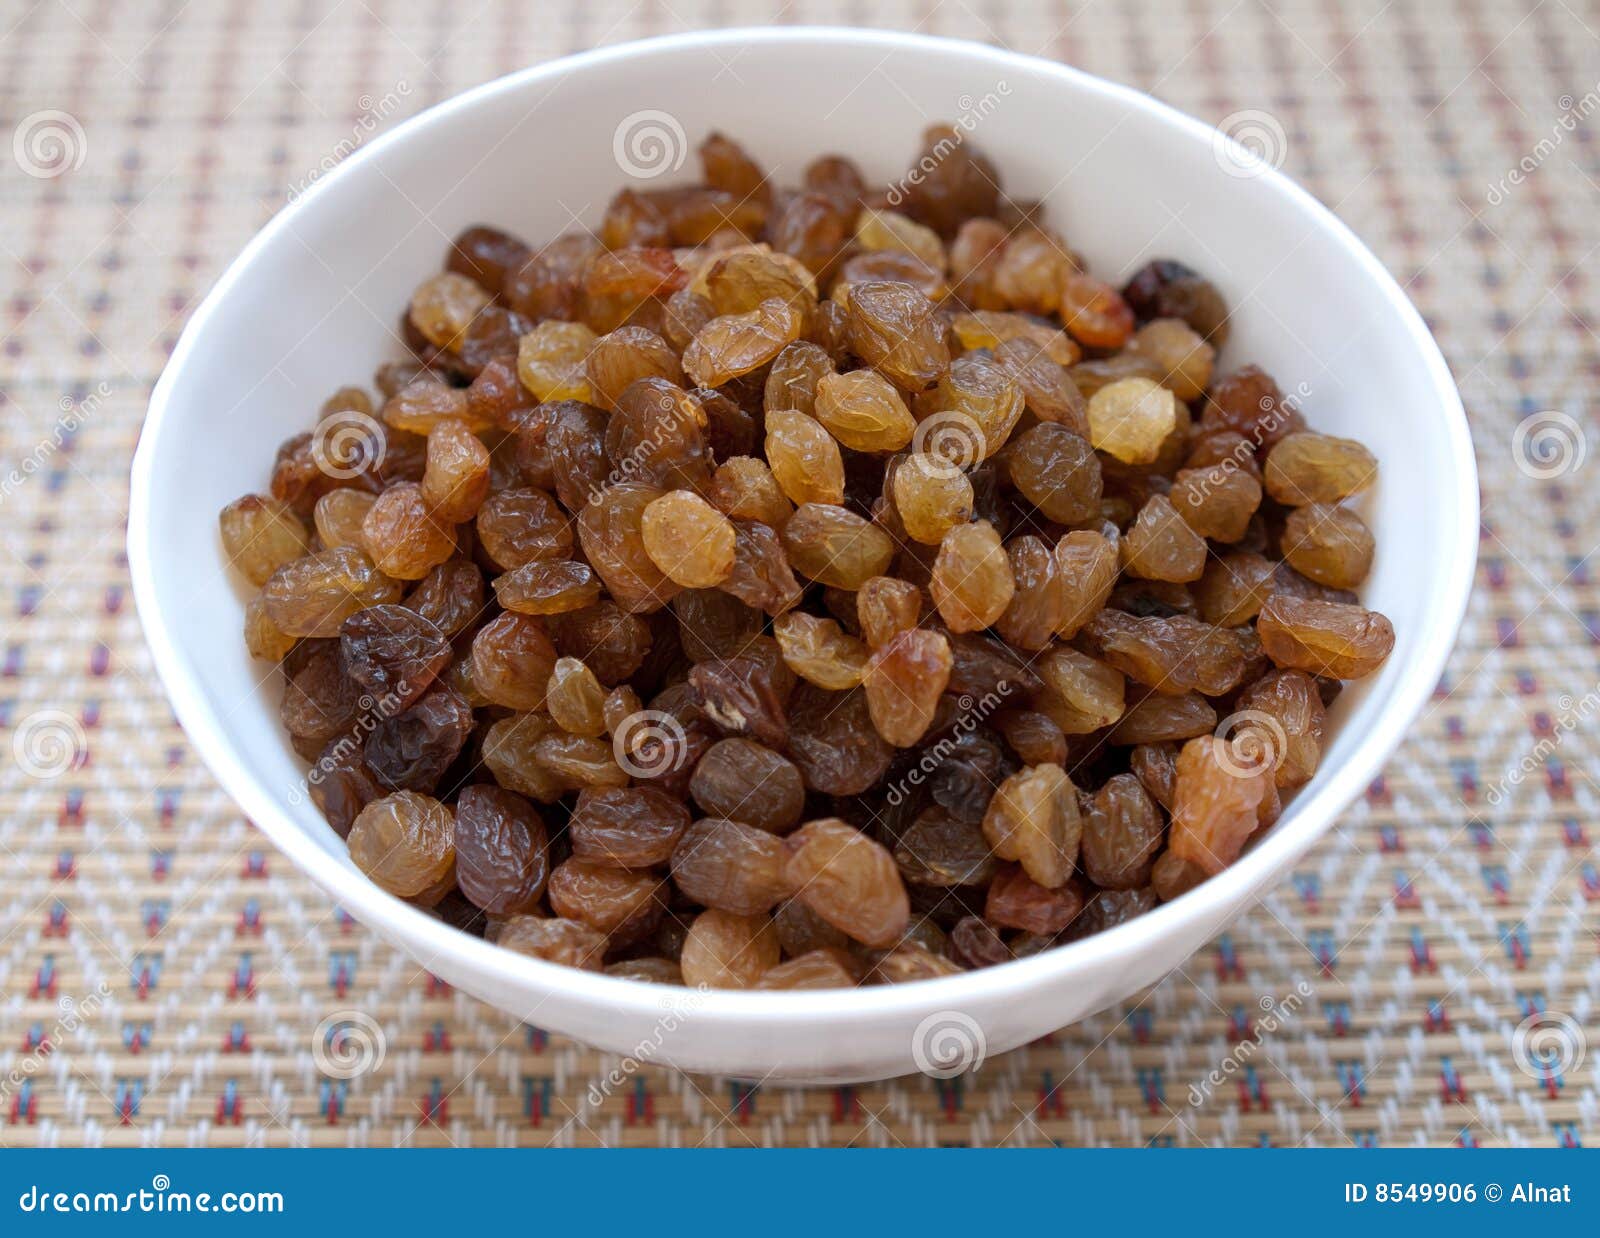 Bowl of raisins stock photo. Image of tablecloth, food - 8549906